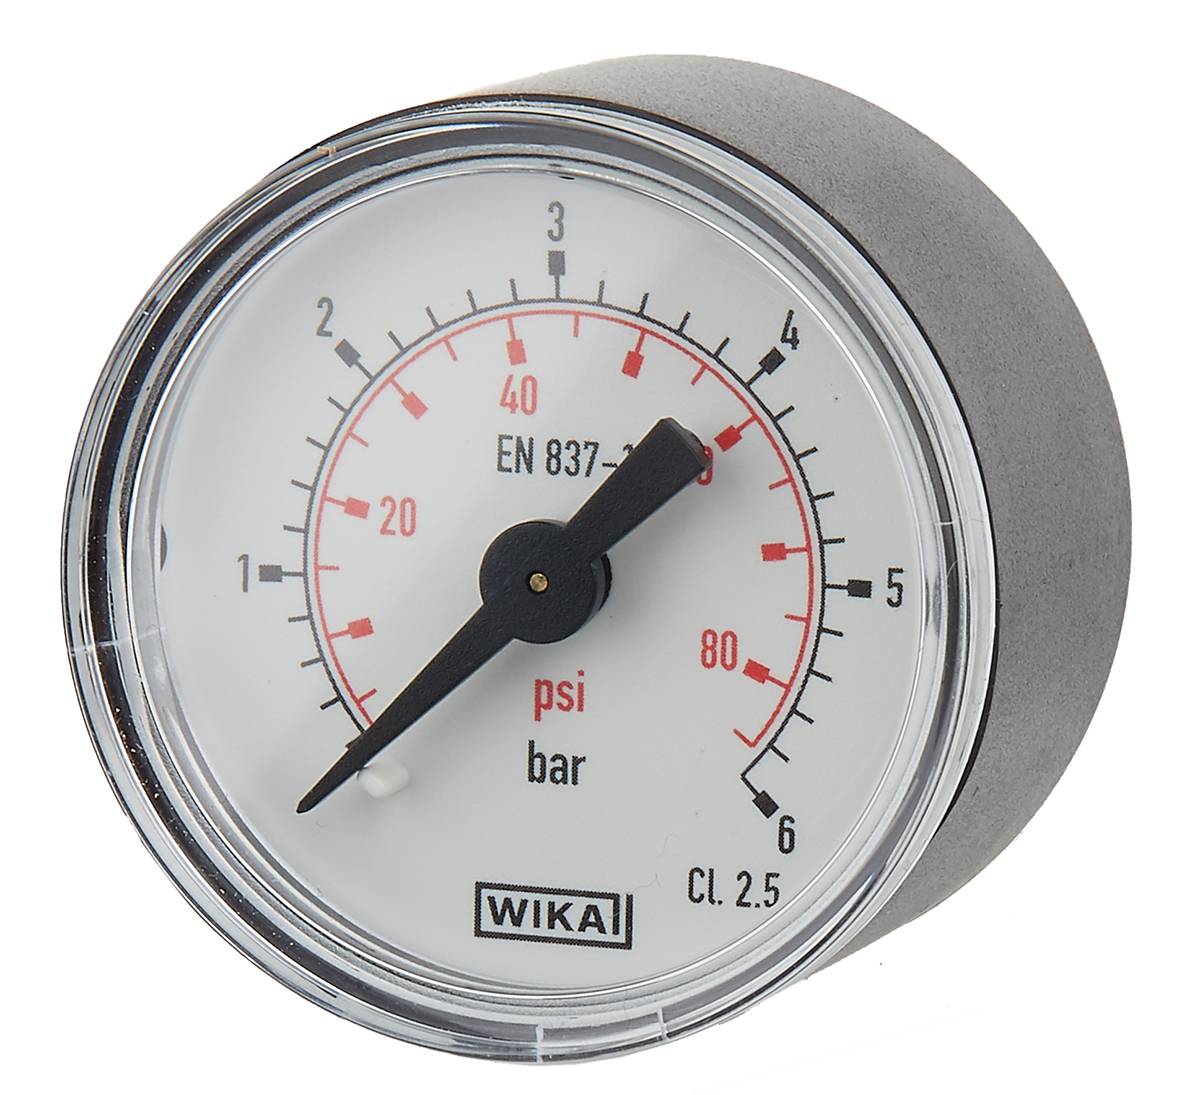 Pressure Gauge: What Is It? How Is It Used? Types Of